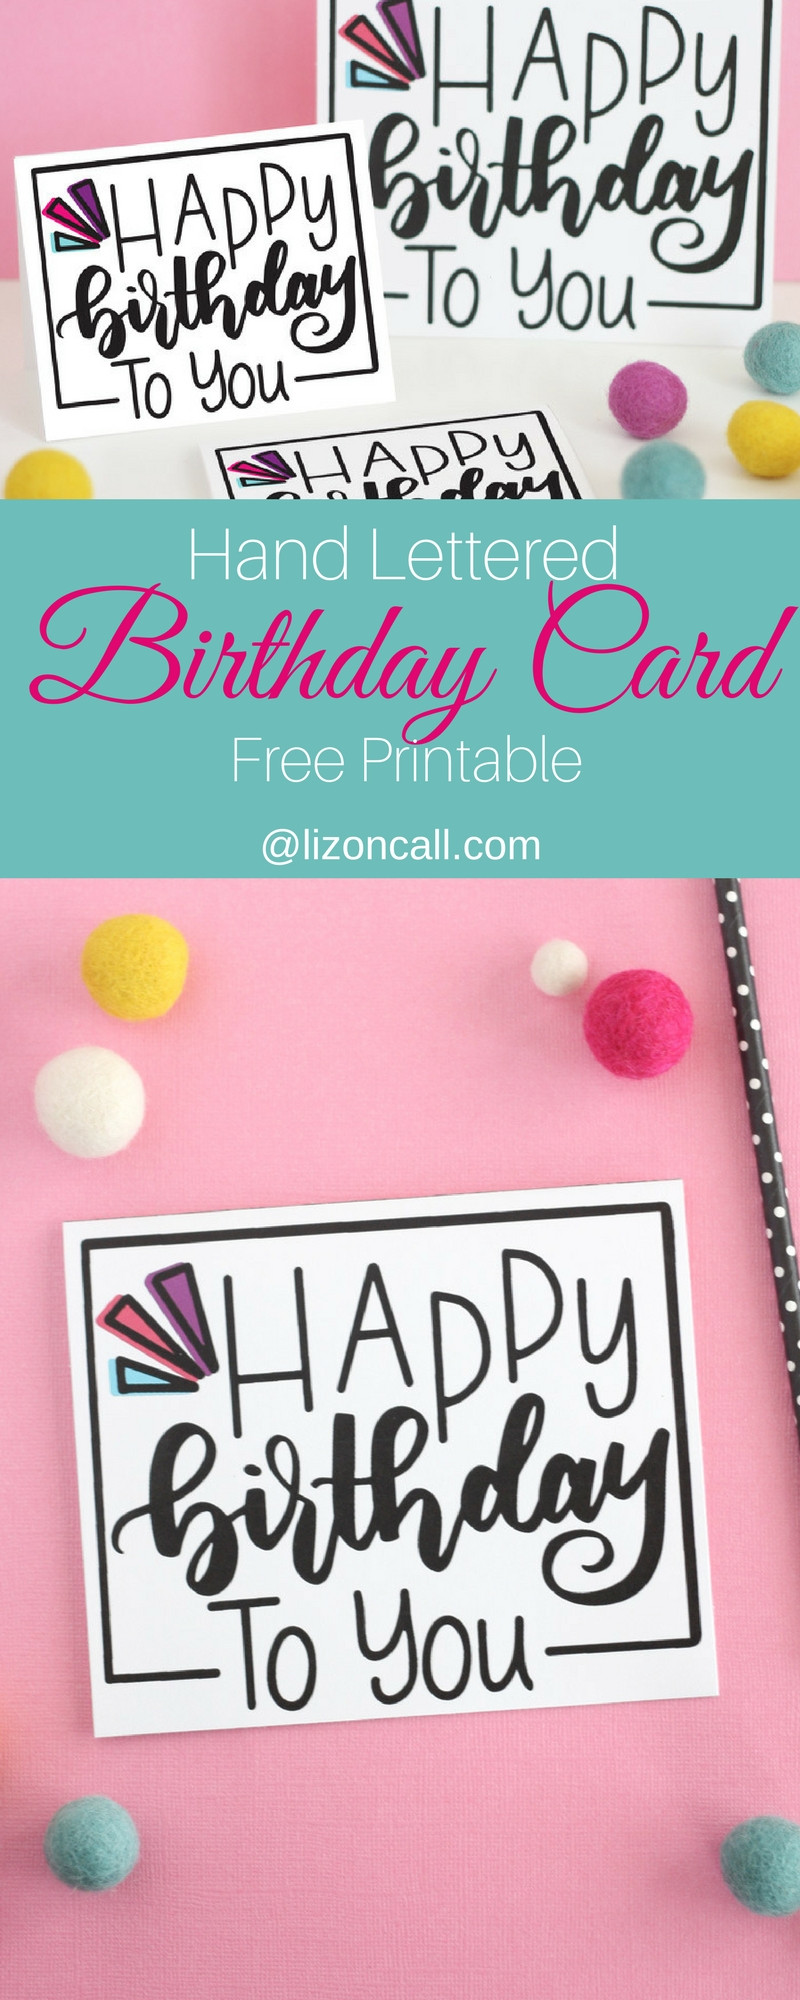 Print Birthday Cards
 Hand Lettered Free Printable Birthday Card Liz on Call